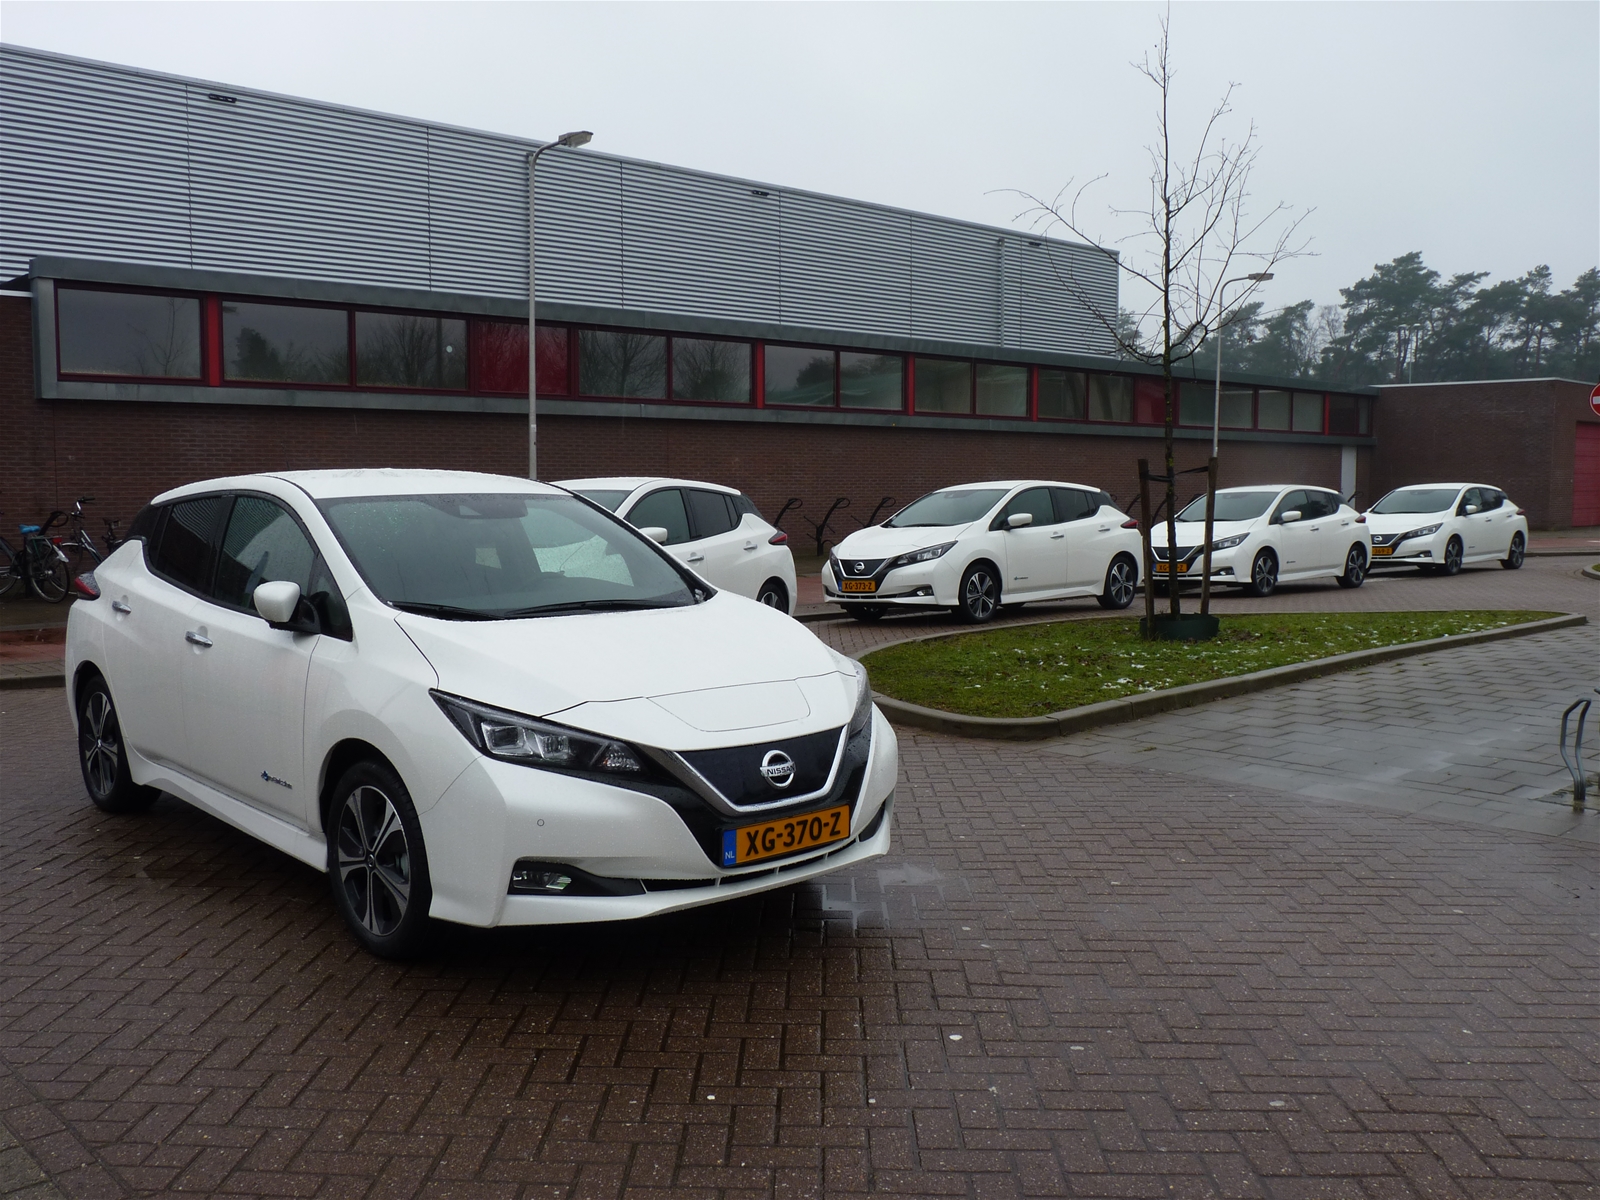 De deelauto's, duurzame moderne Nissan LEAF's